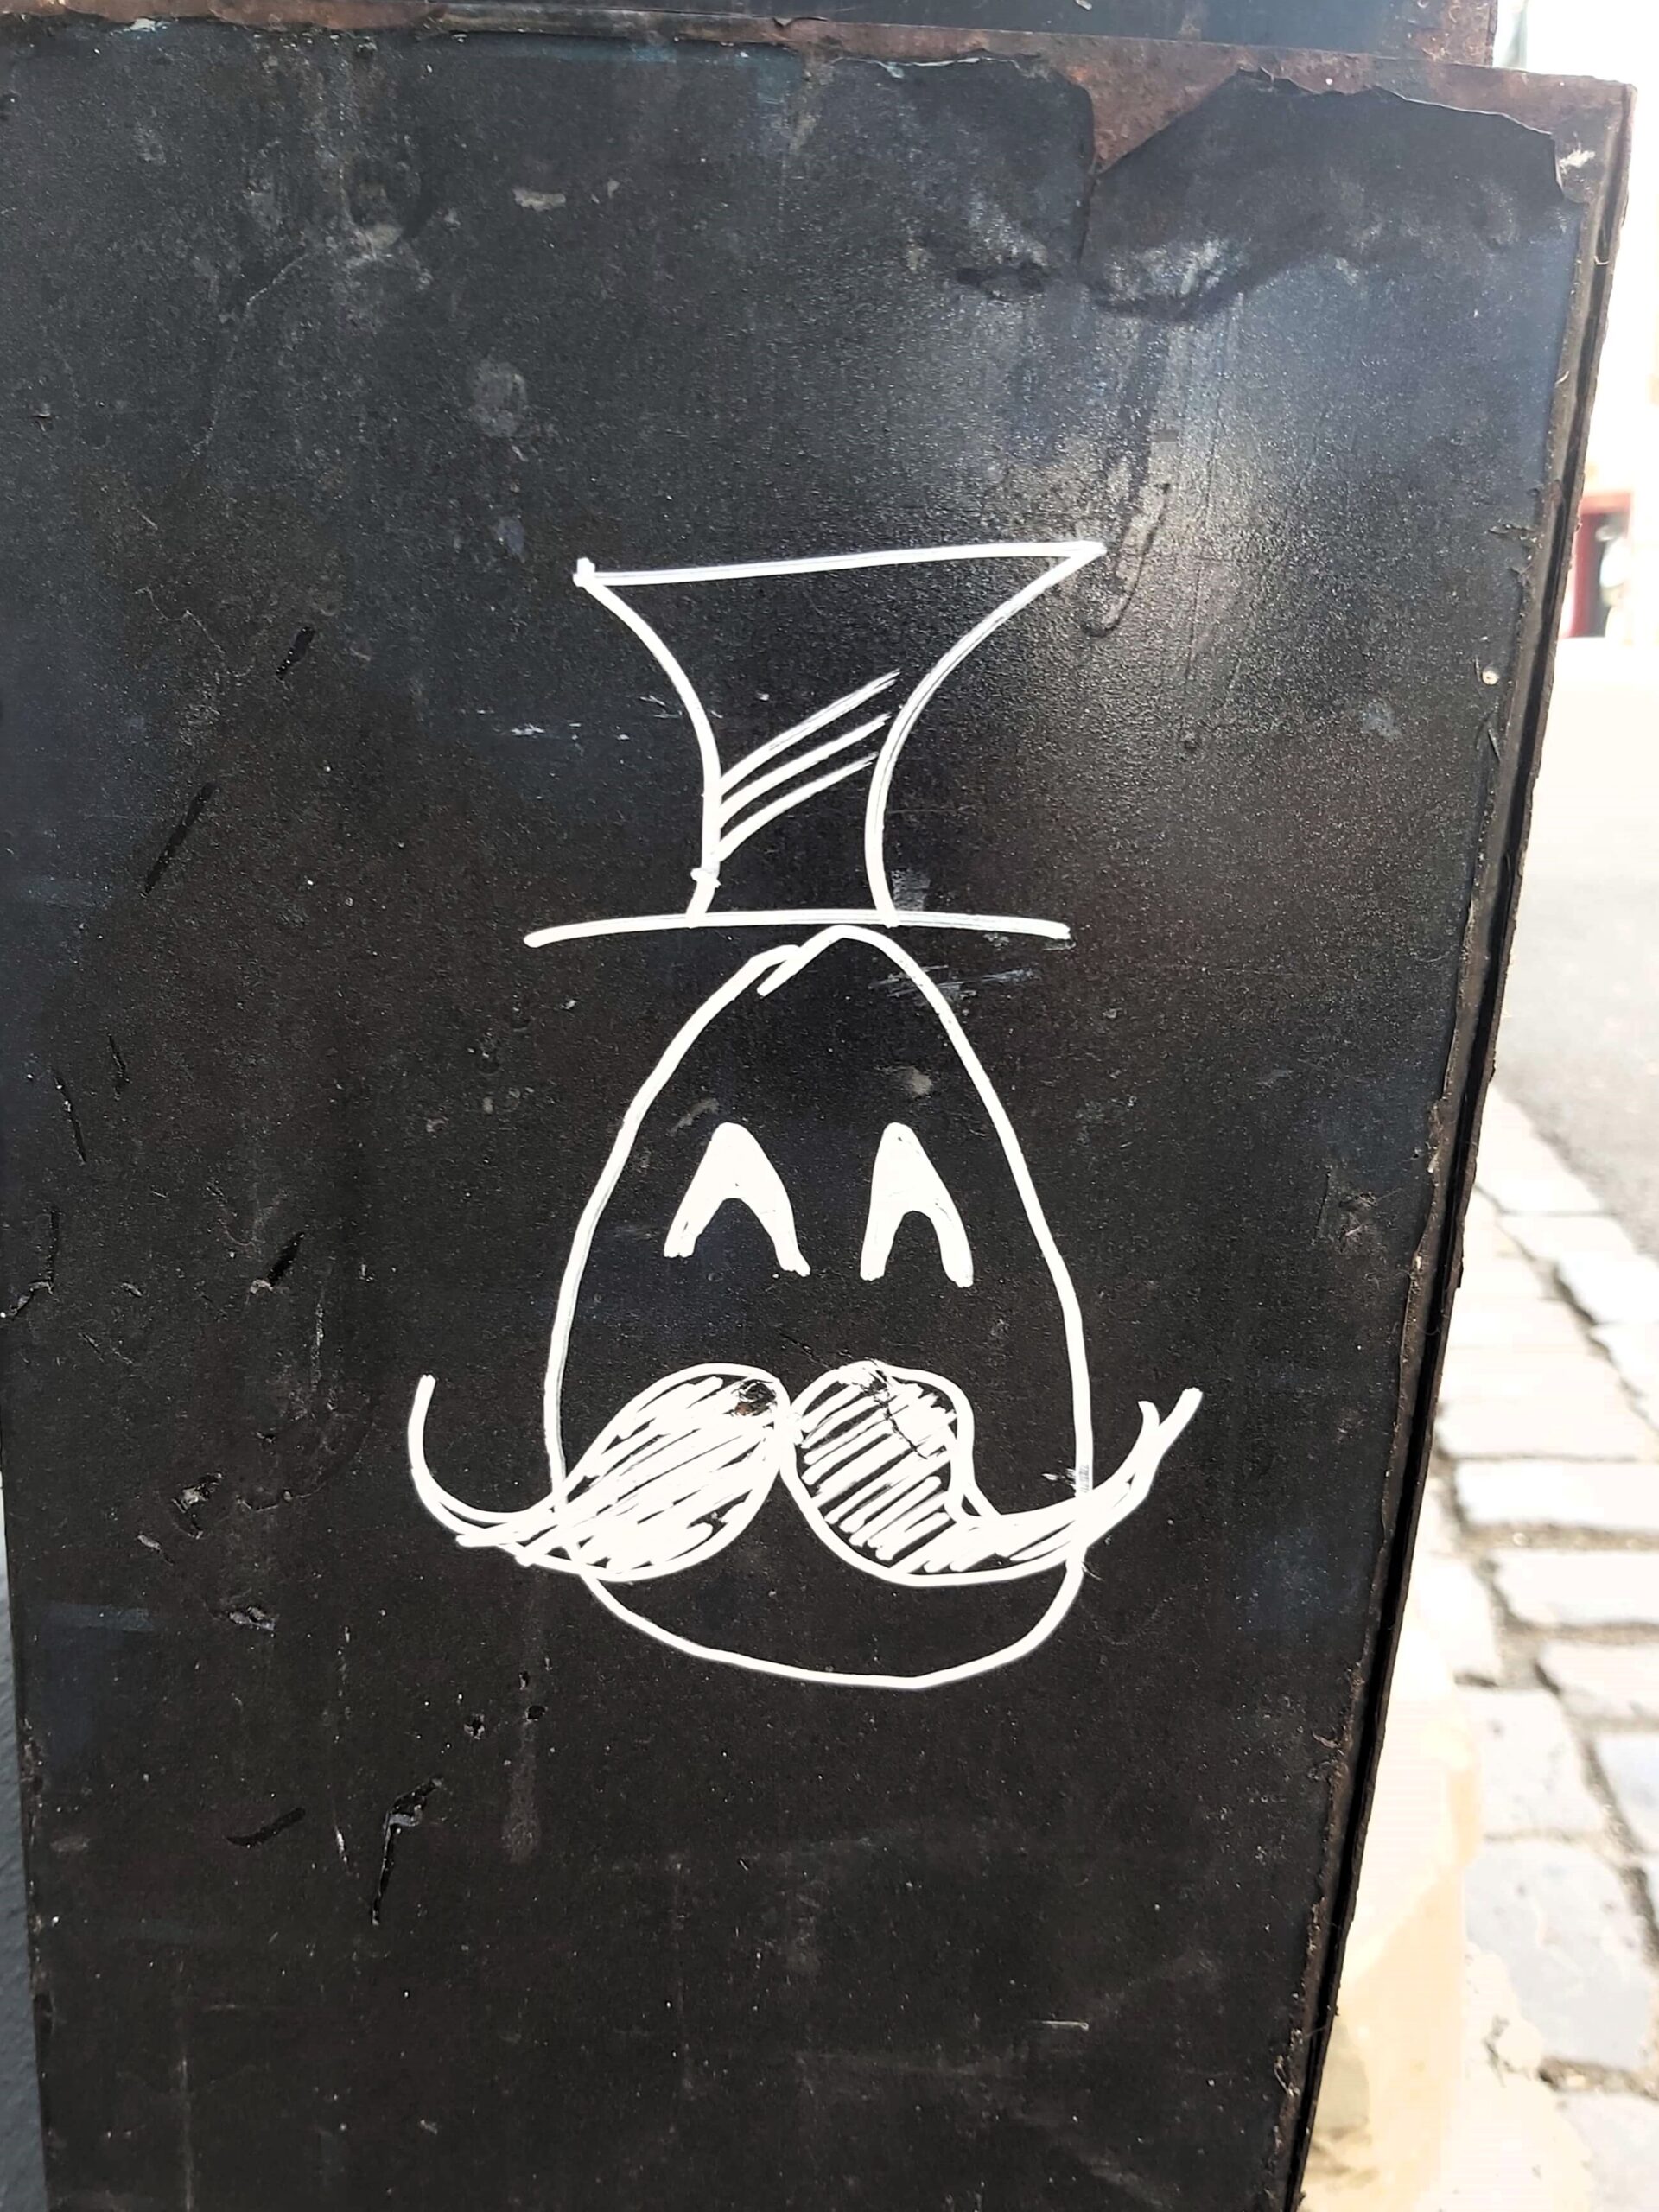 Graffiti in Timisoara, Romania. Face and top hat